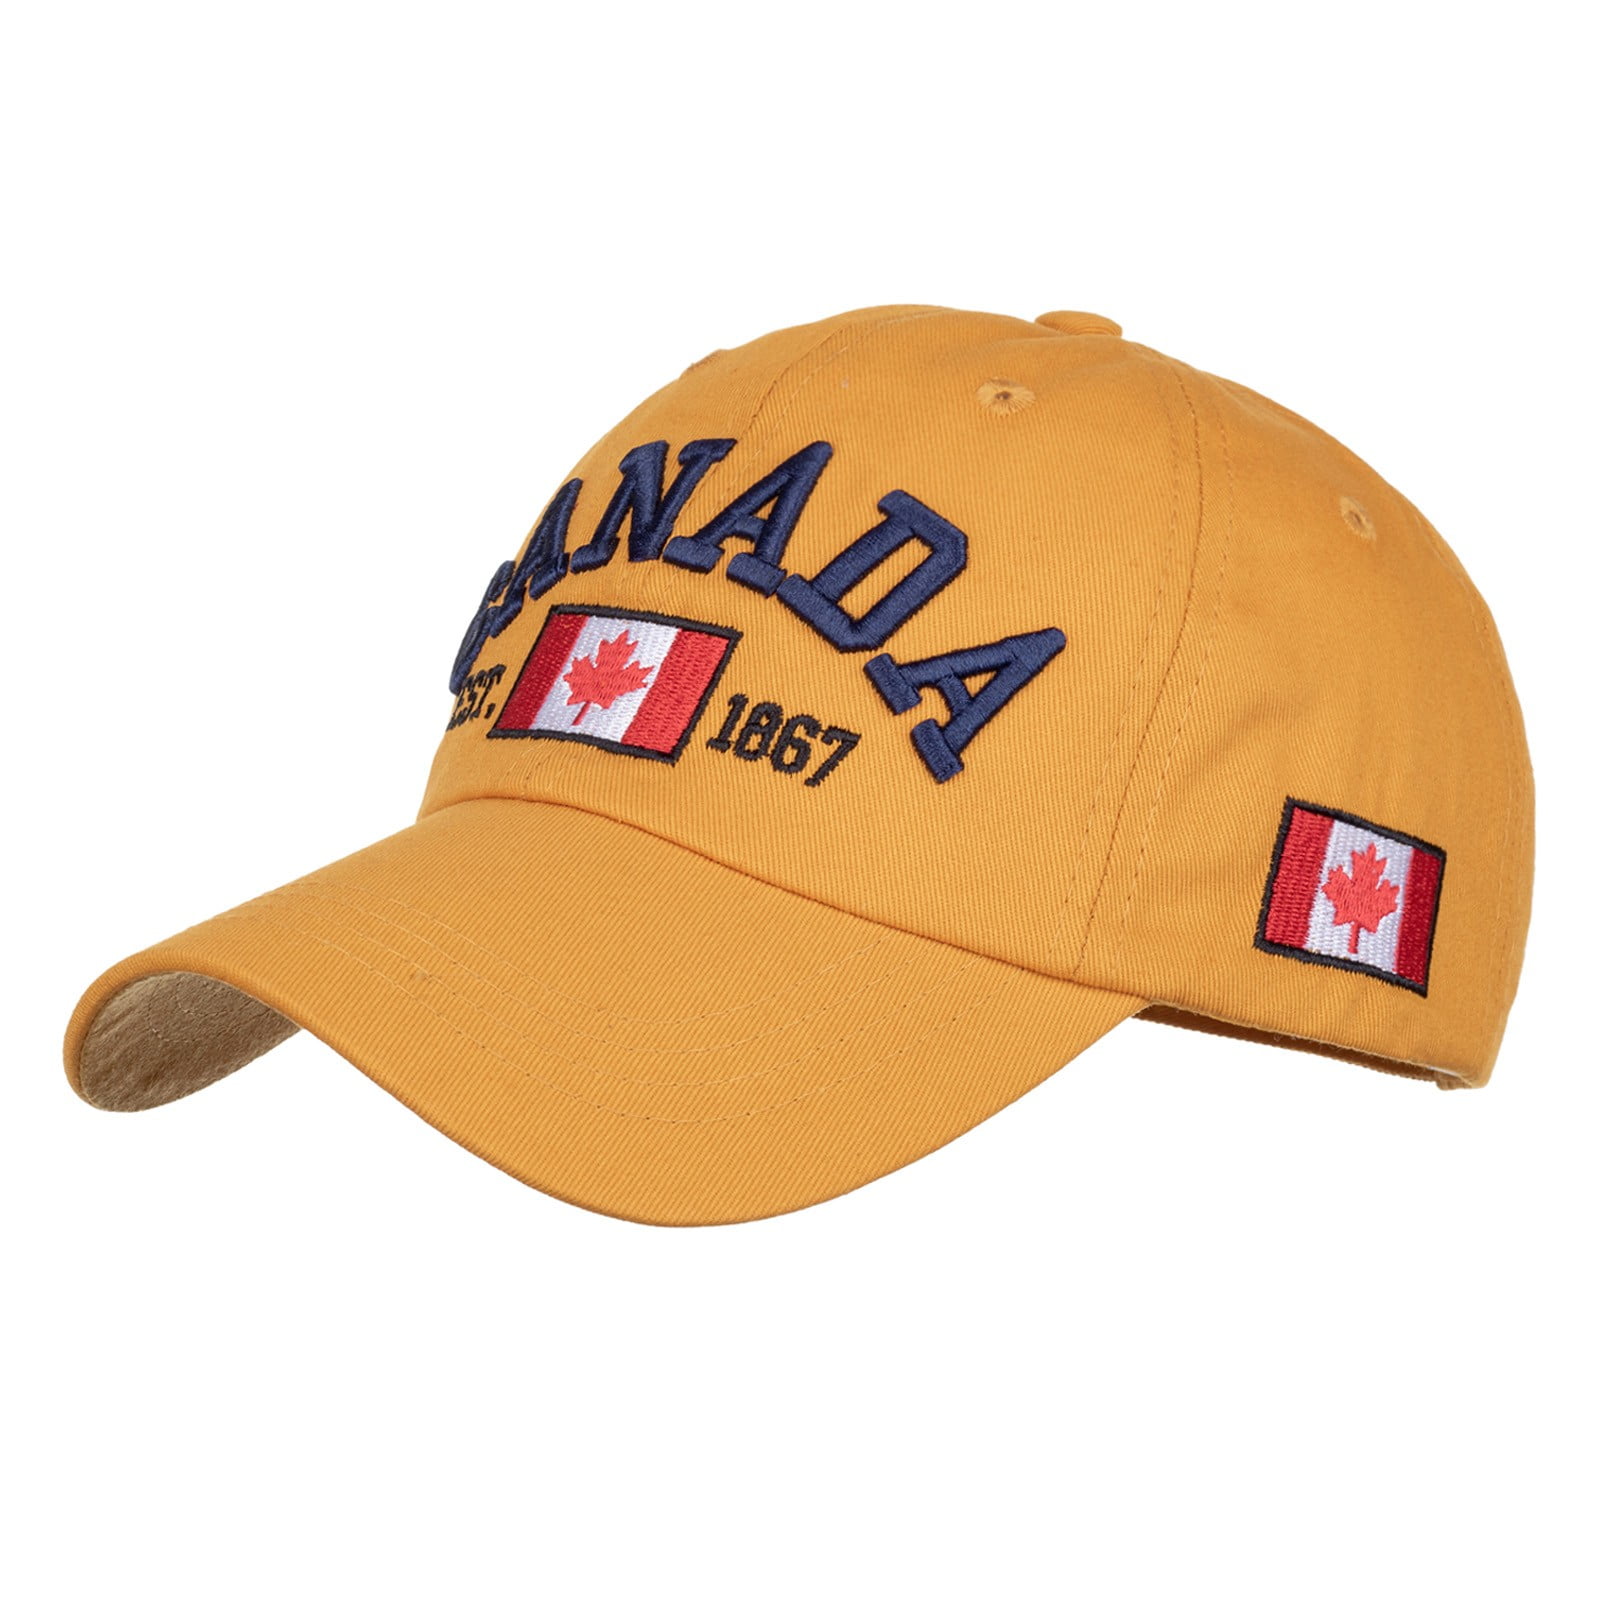 Baseball Hats Retro Greek Flag Fish Kids Sun Adjustable Low Profile Hat 